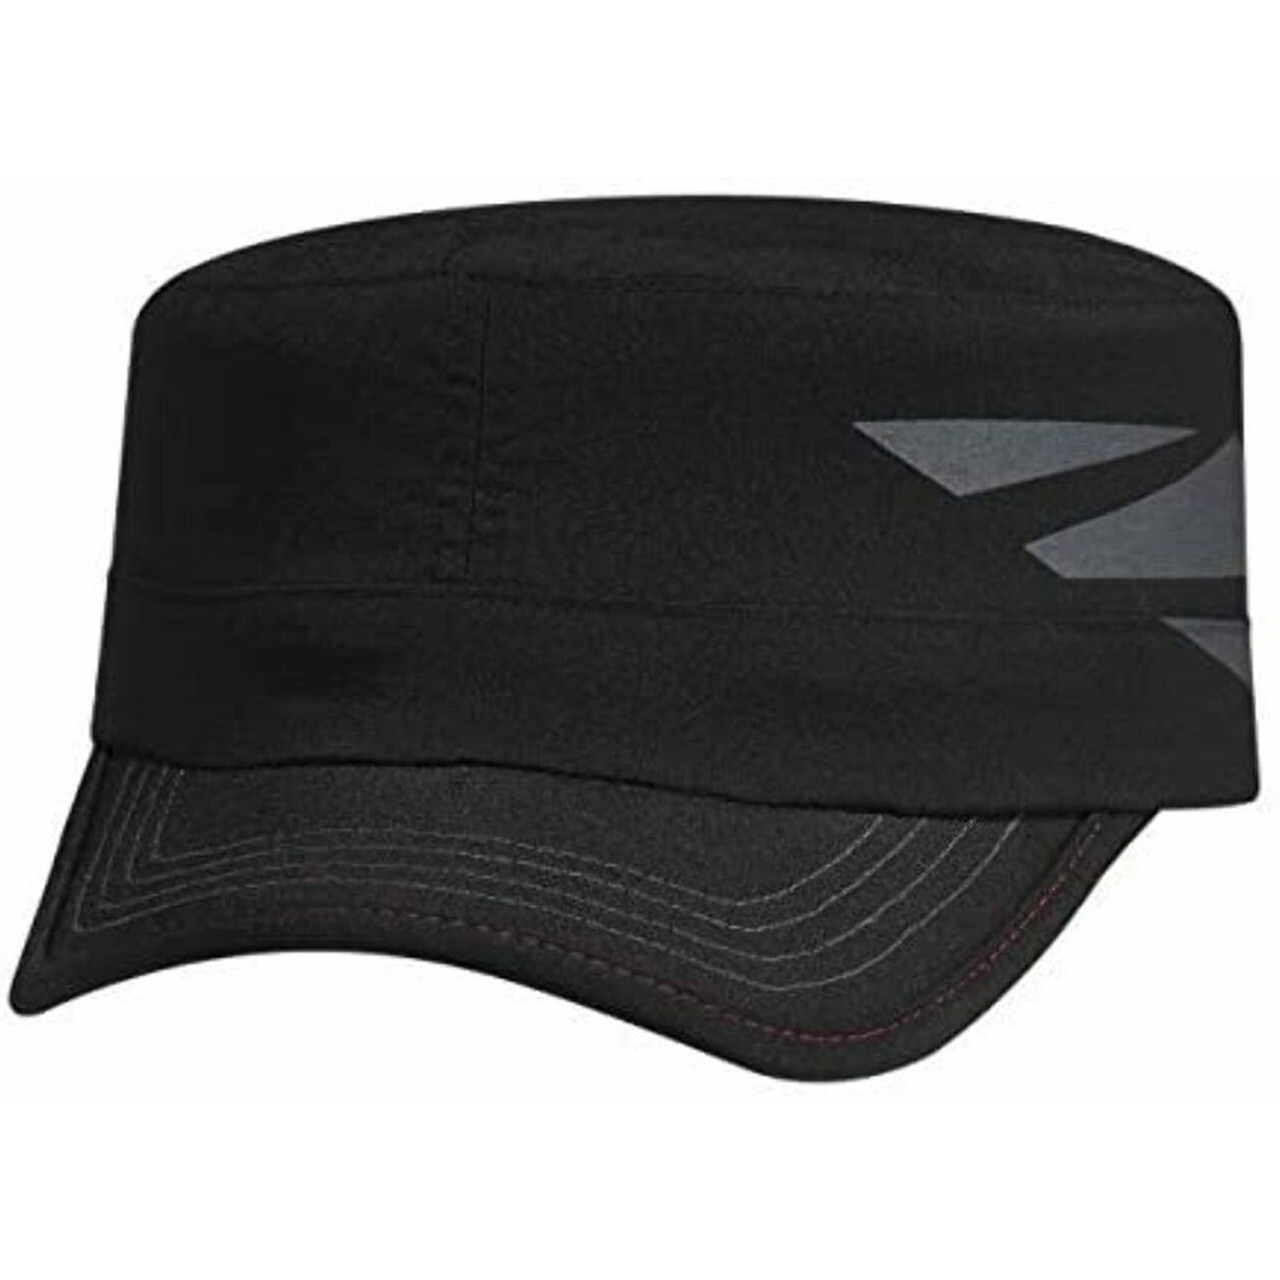 Sea-Doo Men's Fitted Black Freedom Cap Hat Small/Medium 2863517290